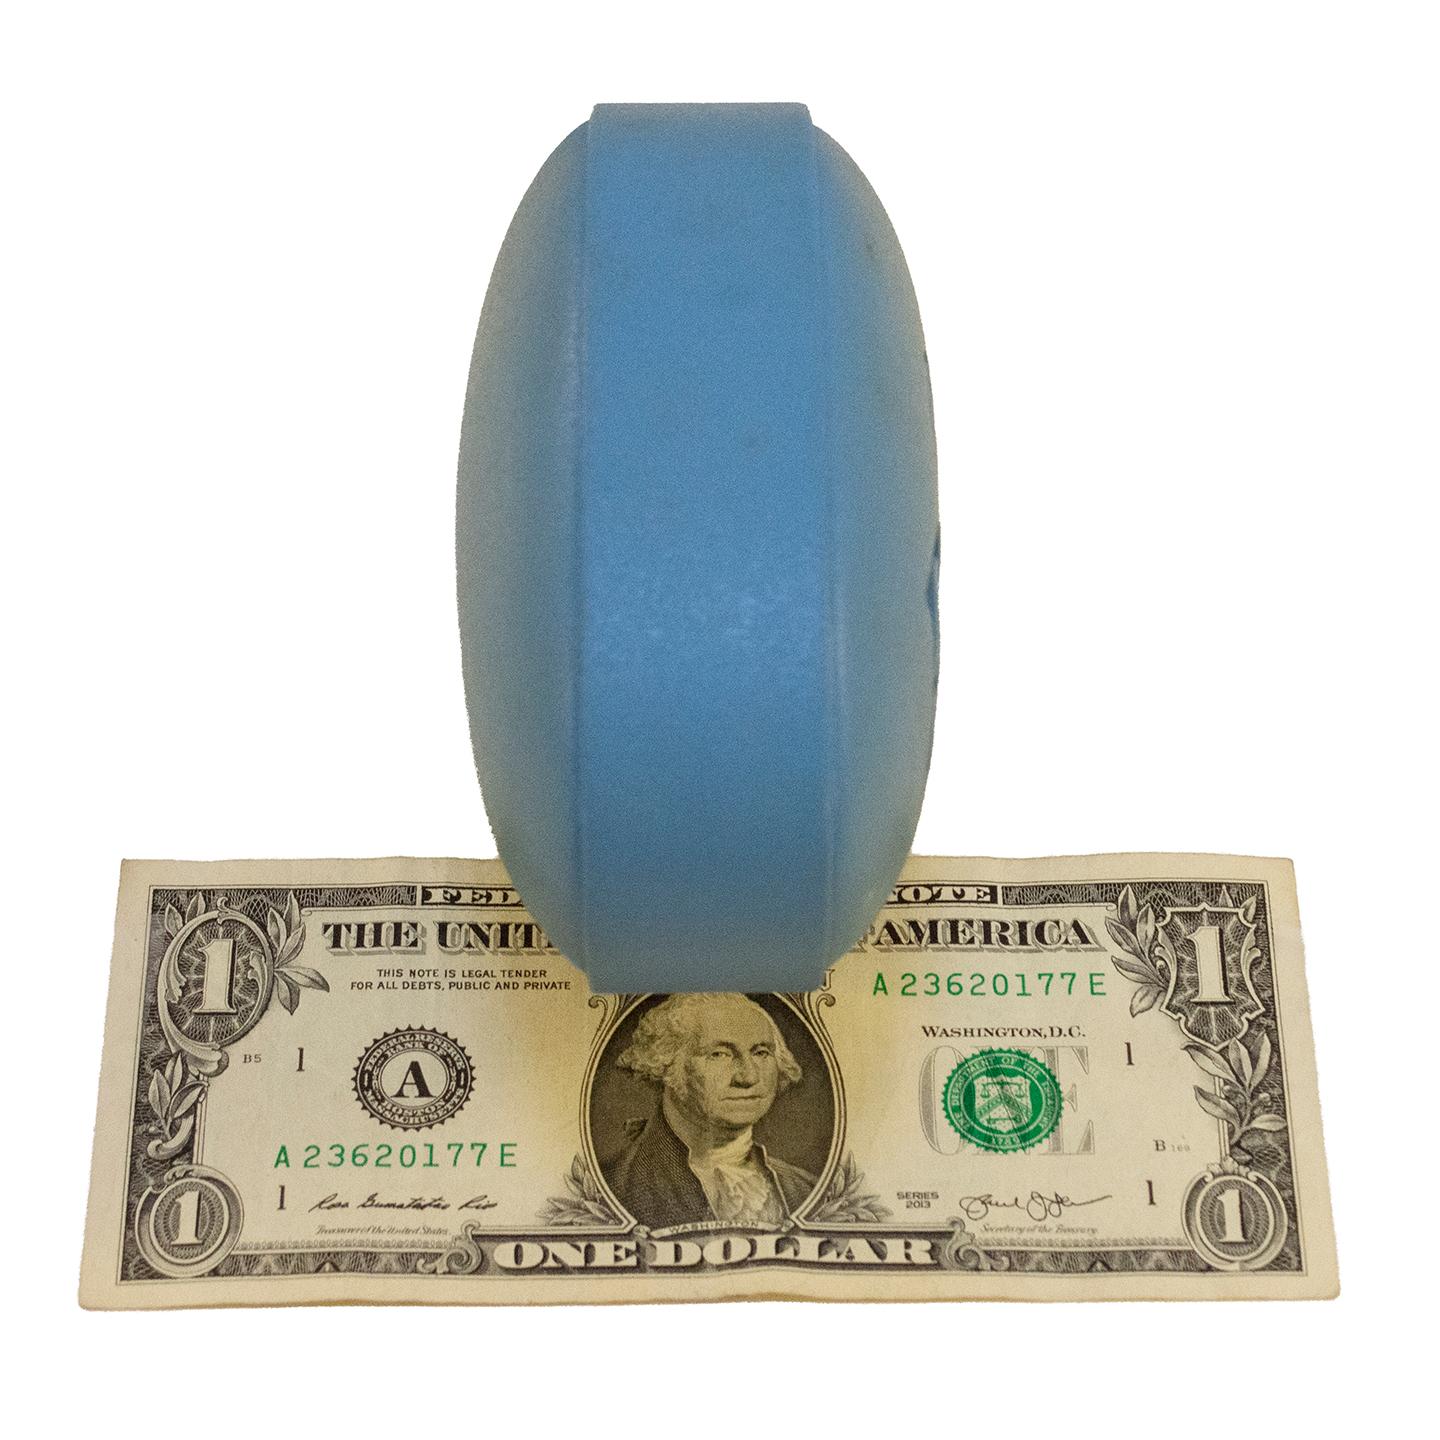 American Sculpture of a Blue Viagra Pill by Mark Yurkiw